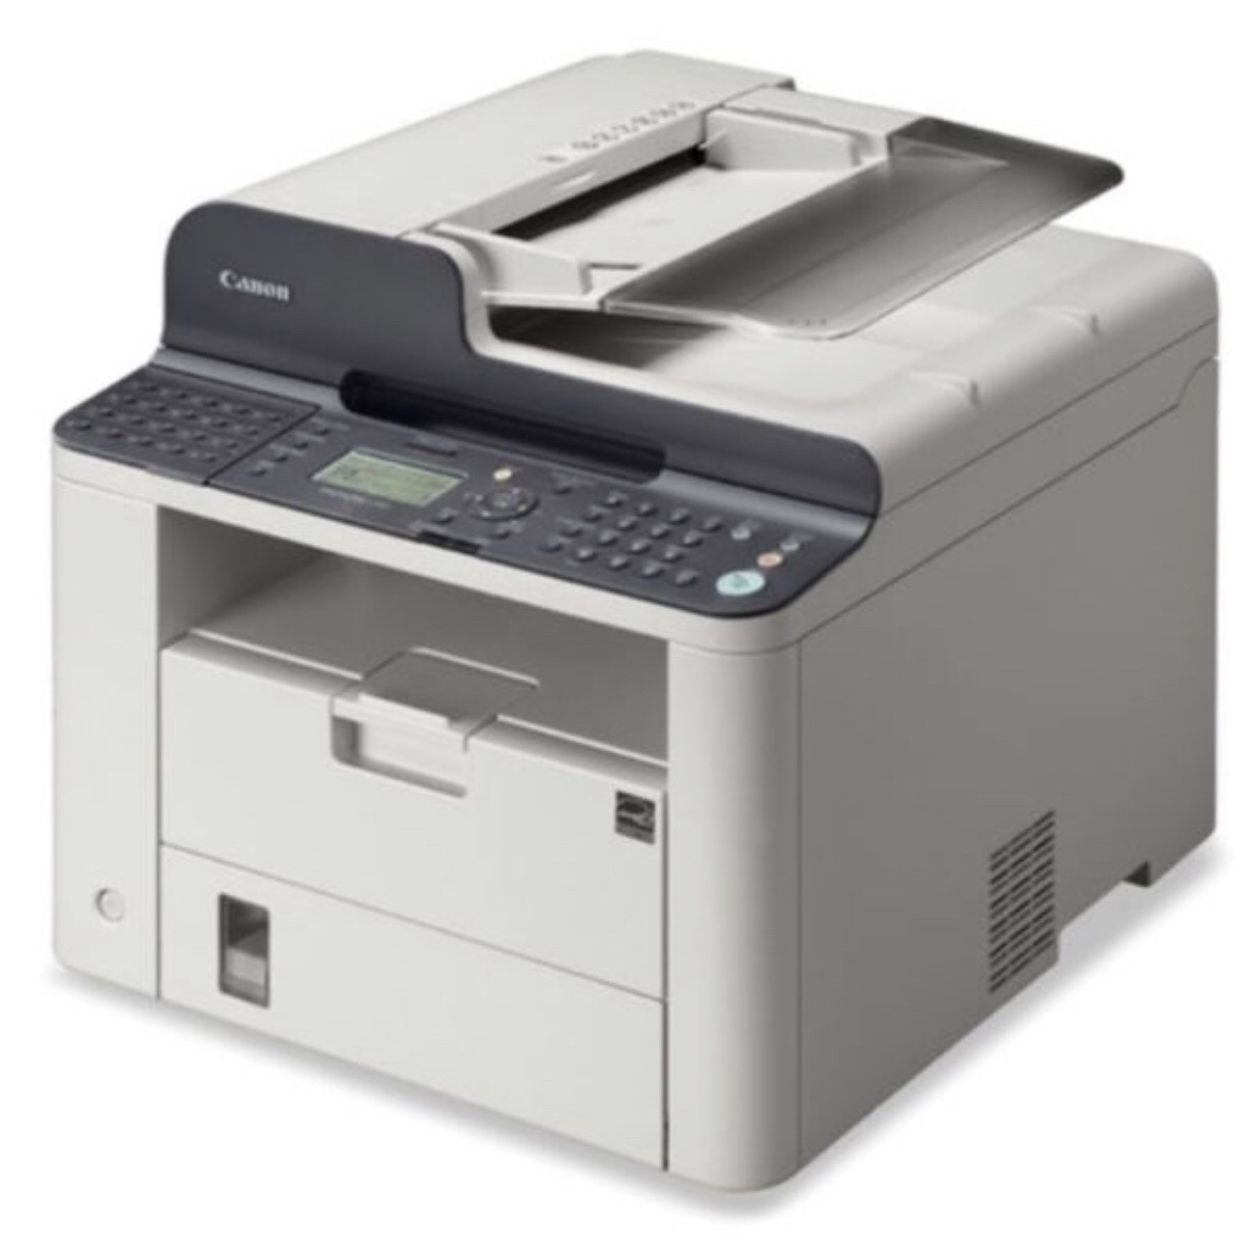 Copier , printer ,fax Machine